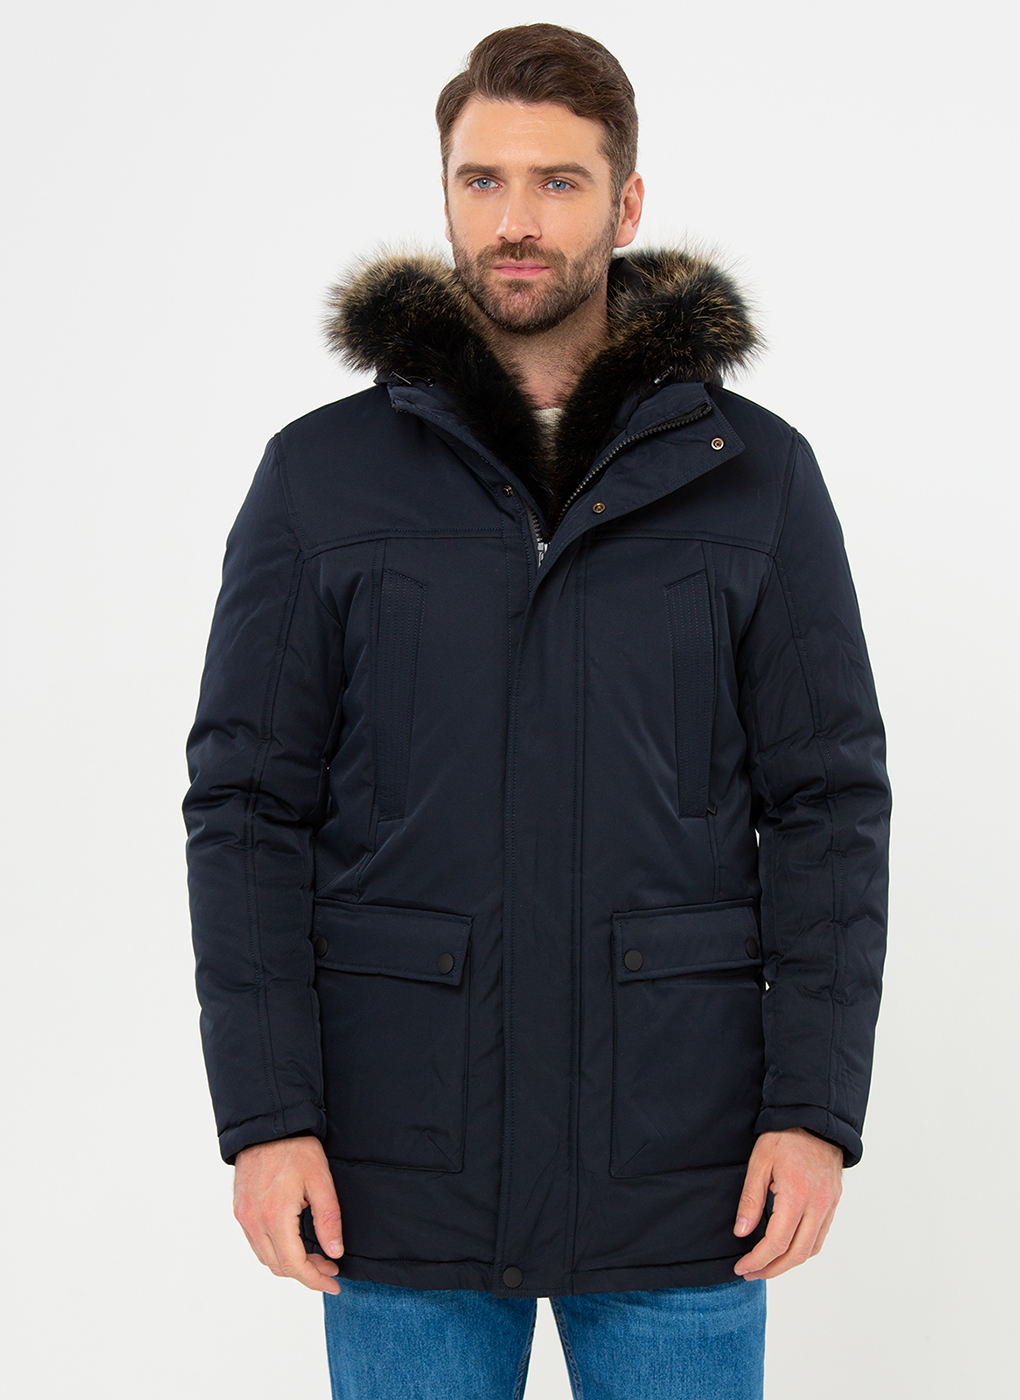 Зимняя куртка мужская Amimoda 65198 синяя 52 RU